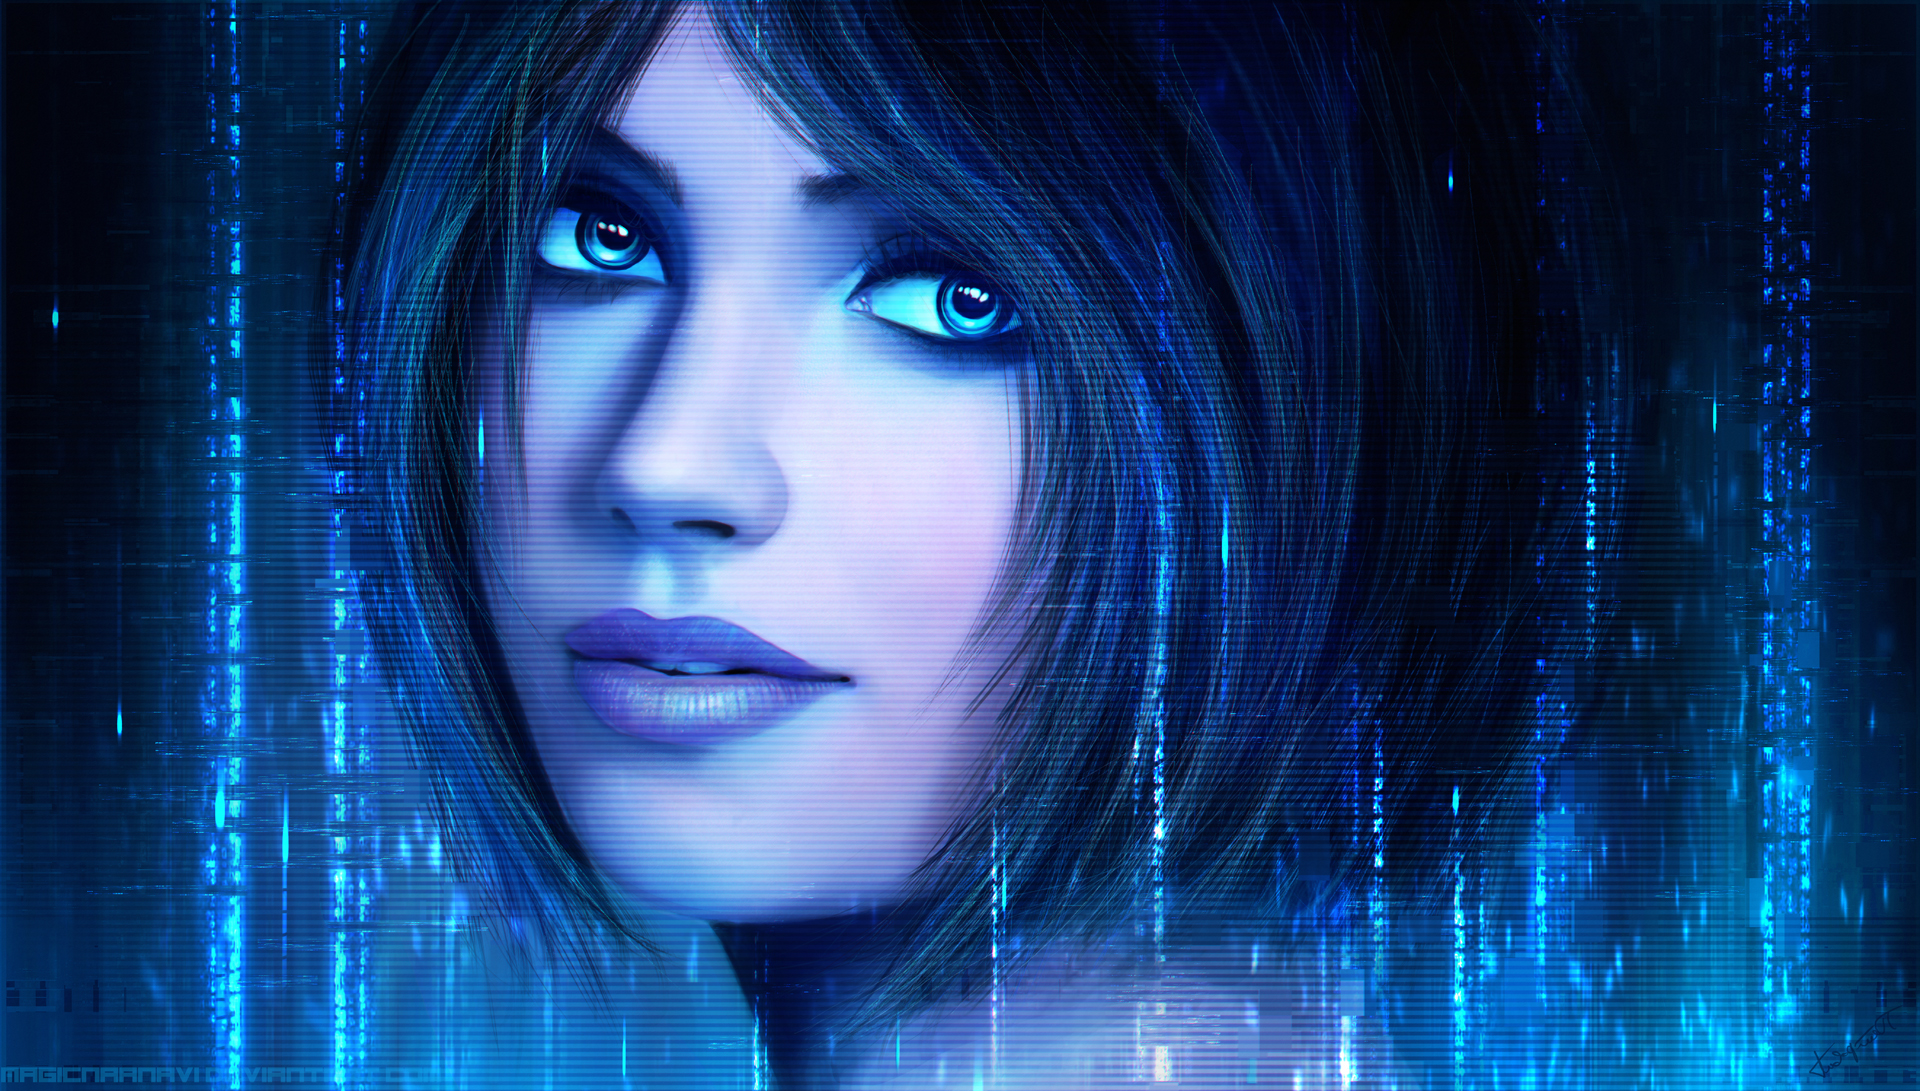 Cortana by MagicnaAnavi on DeviantArt